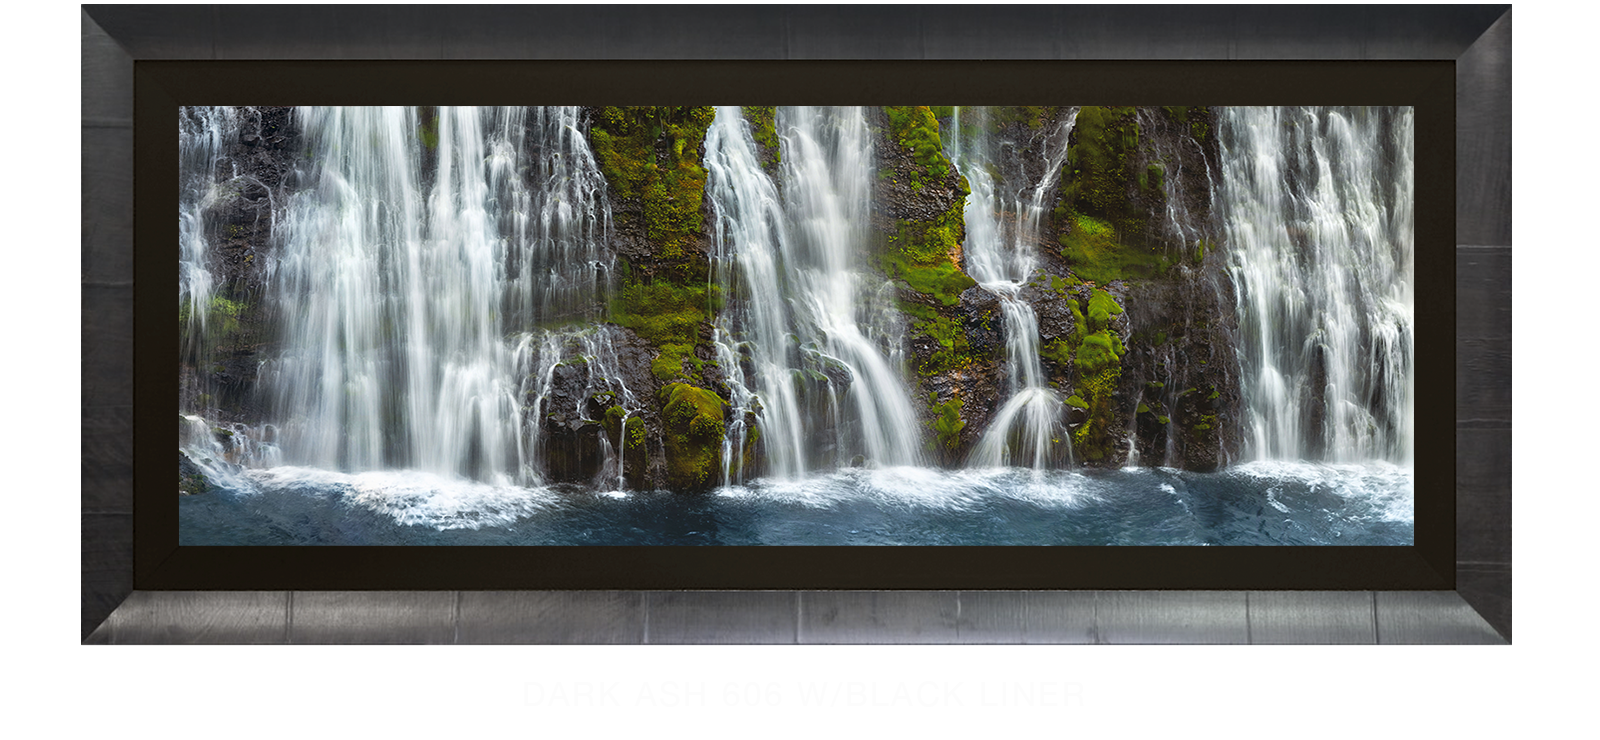 17_Dark Ash 606 w_Blk Liner